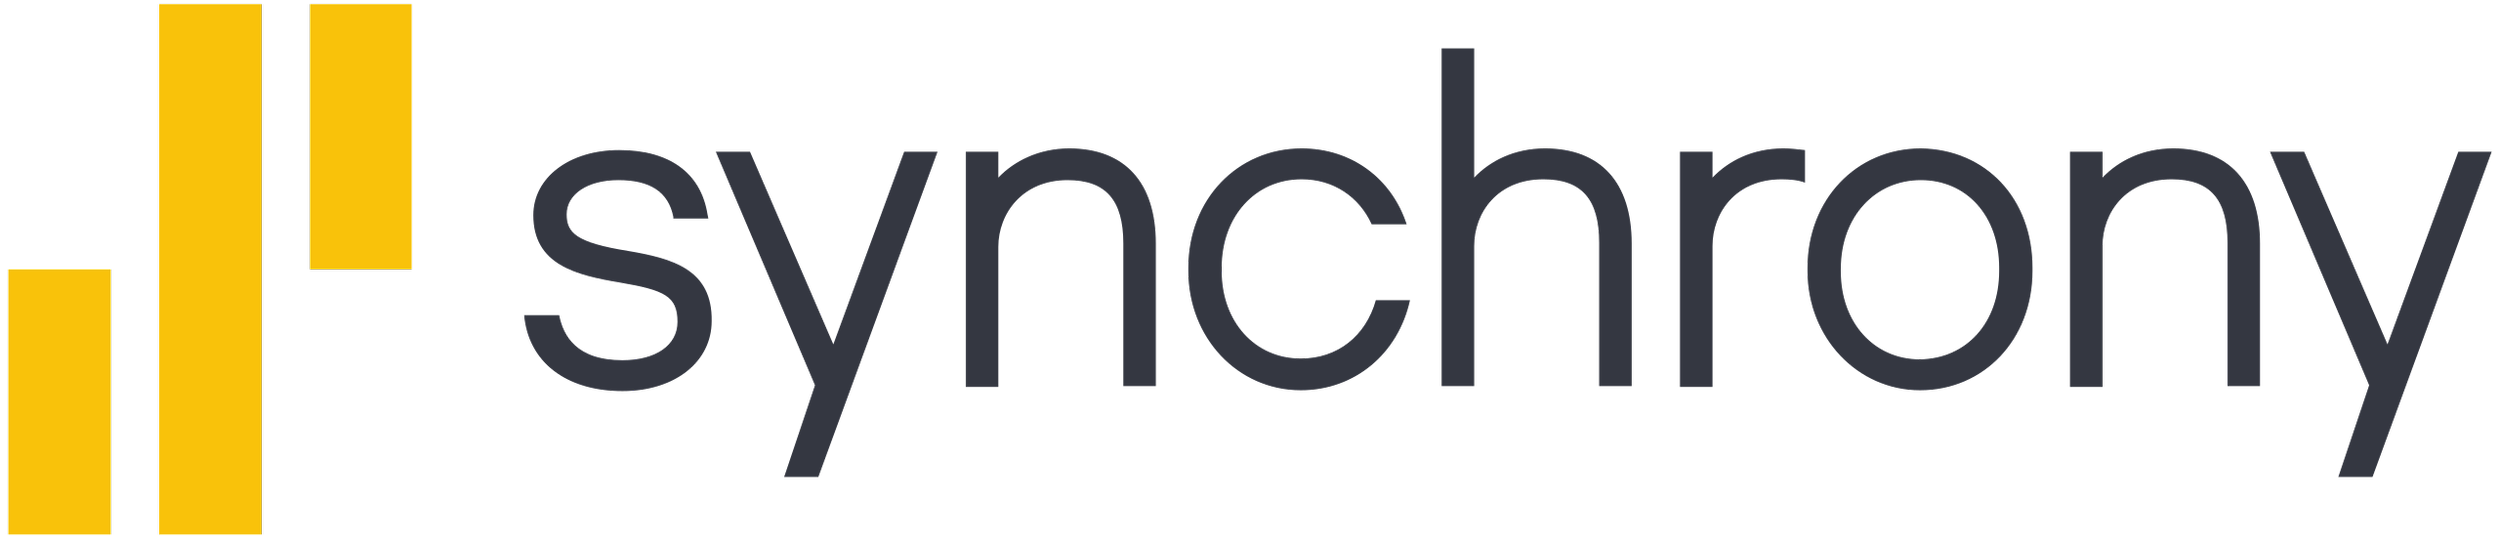 Synchrony_Financial_logo.svg.png